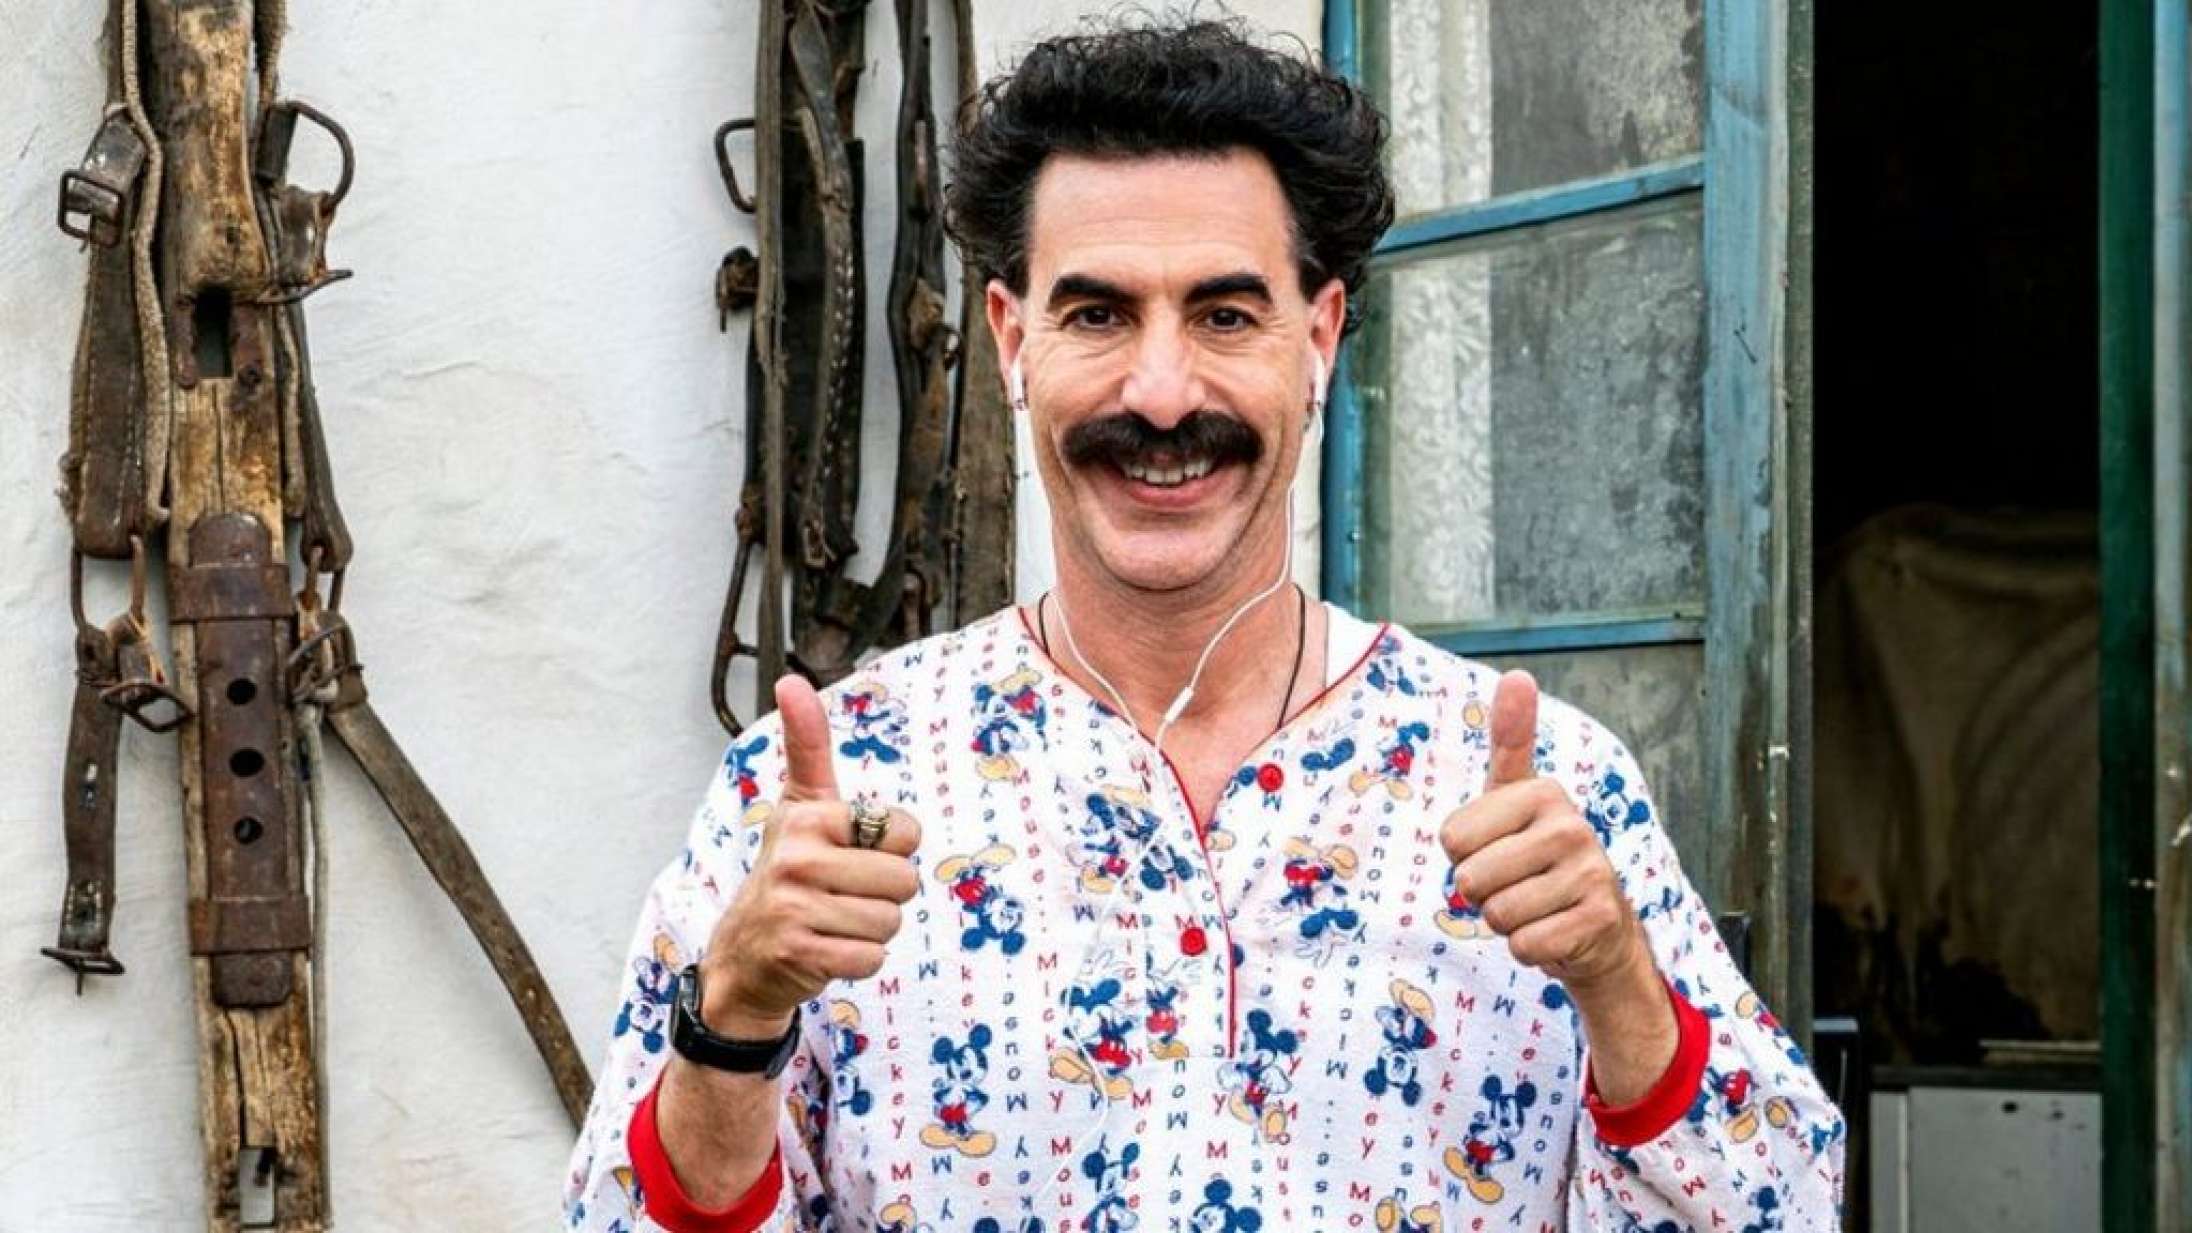 Én scene i den nye ’Borat’-film fik det til at løbe iskoldt ned ad ryggen på mig